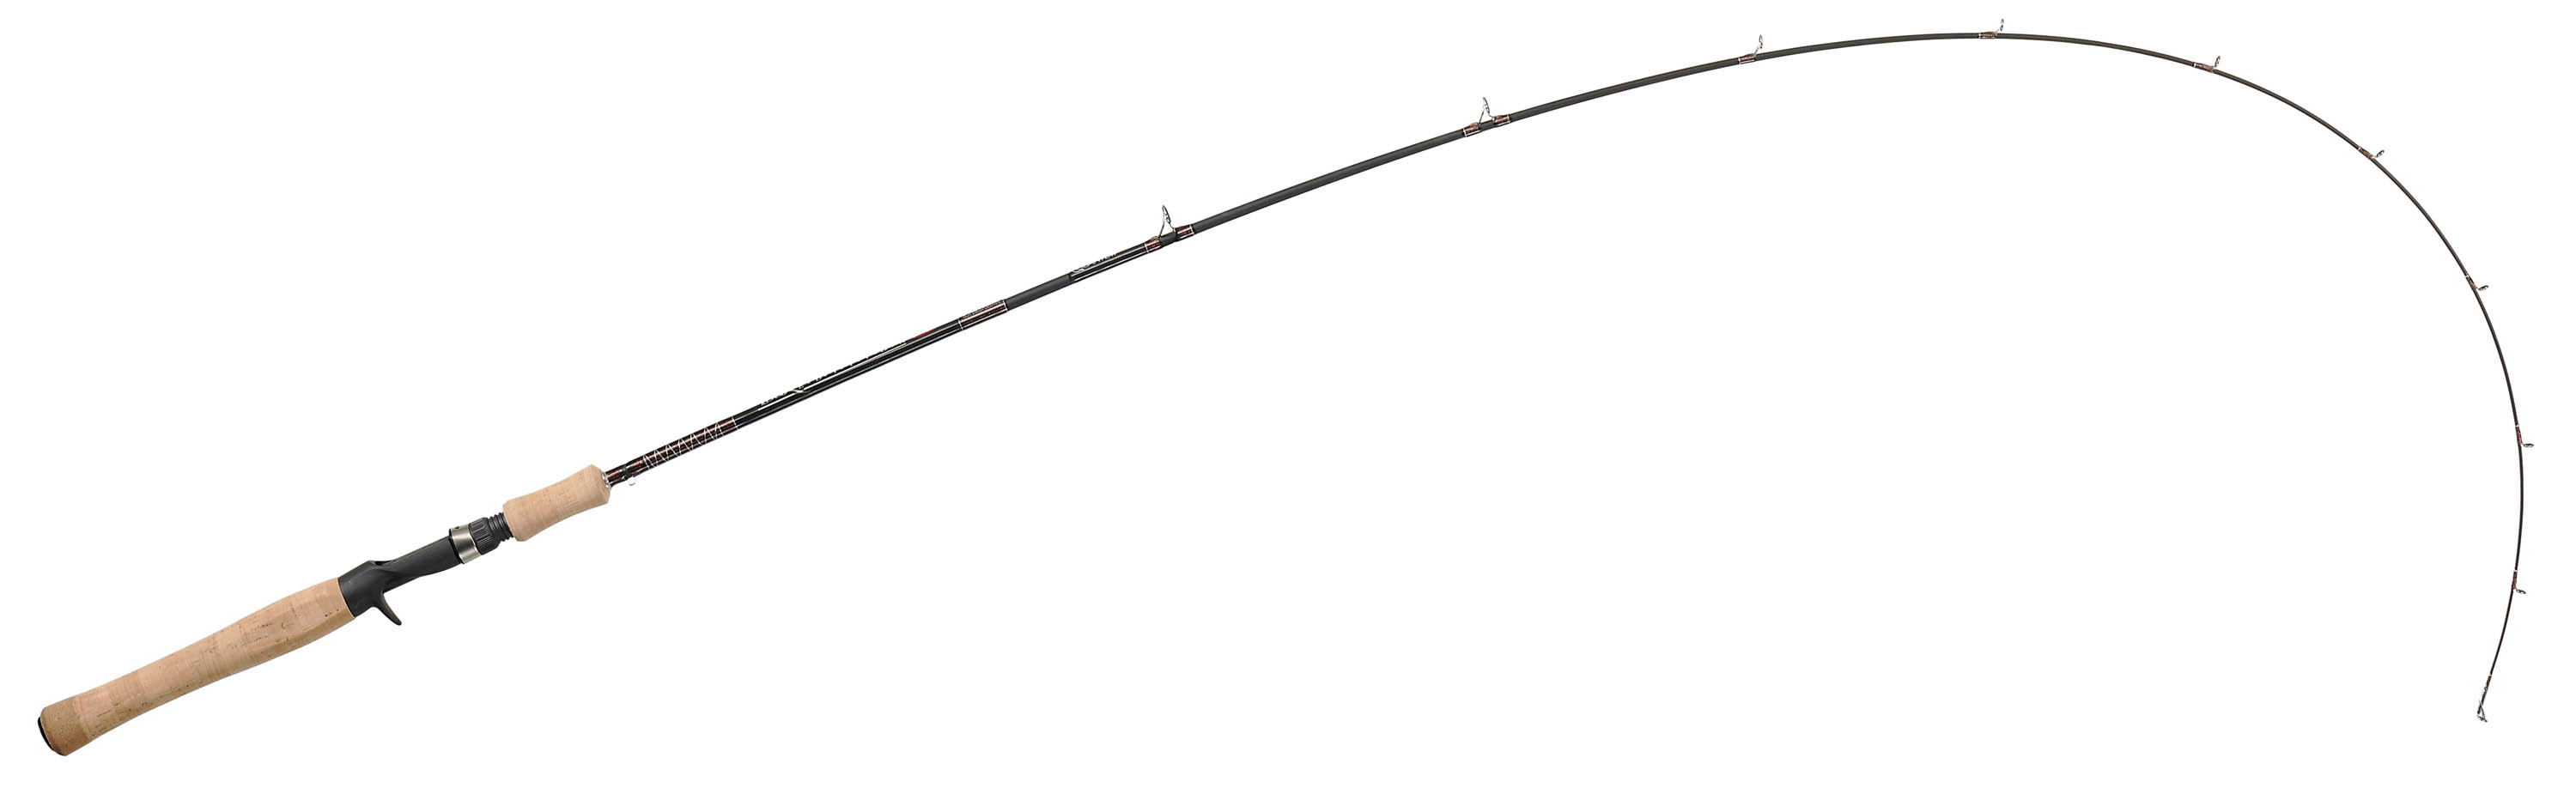 bent fishing rod silhouette